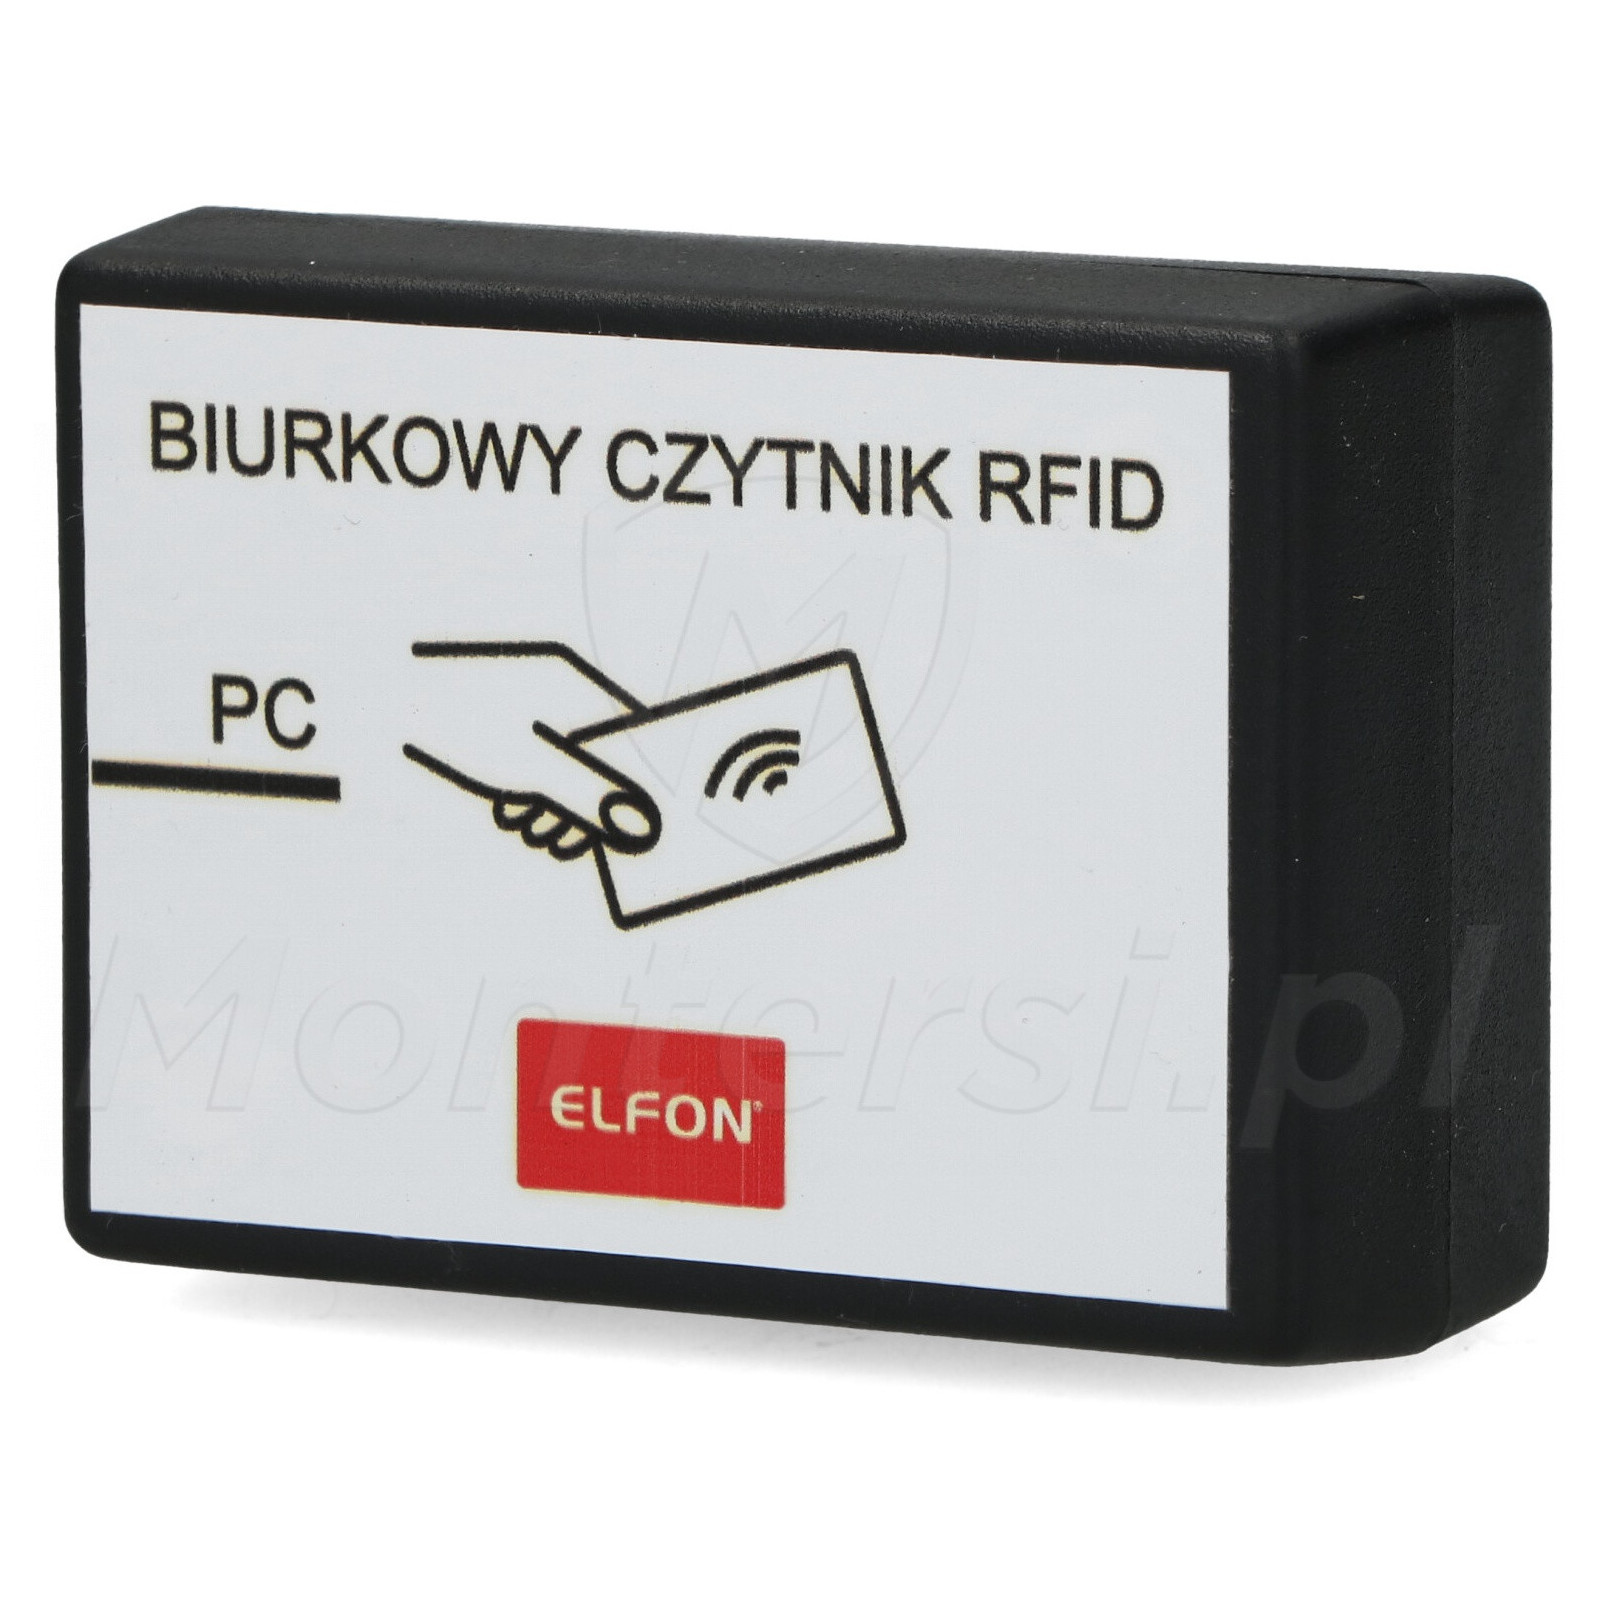 OP-PR RFID - Biurkowy czytnik RFID